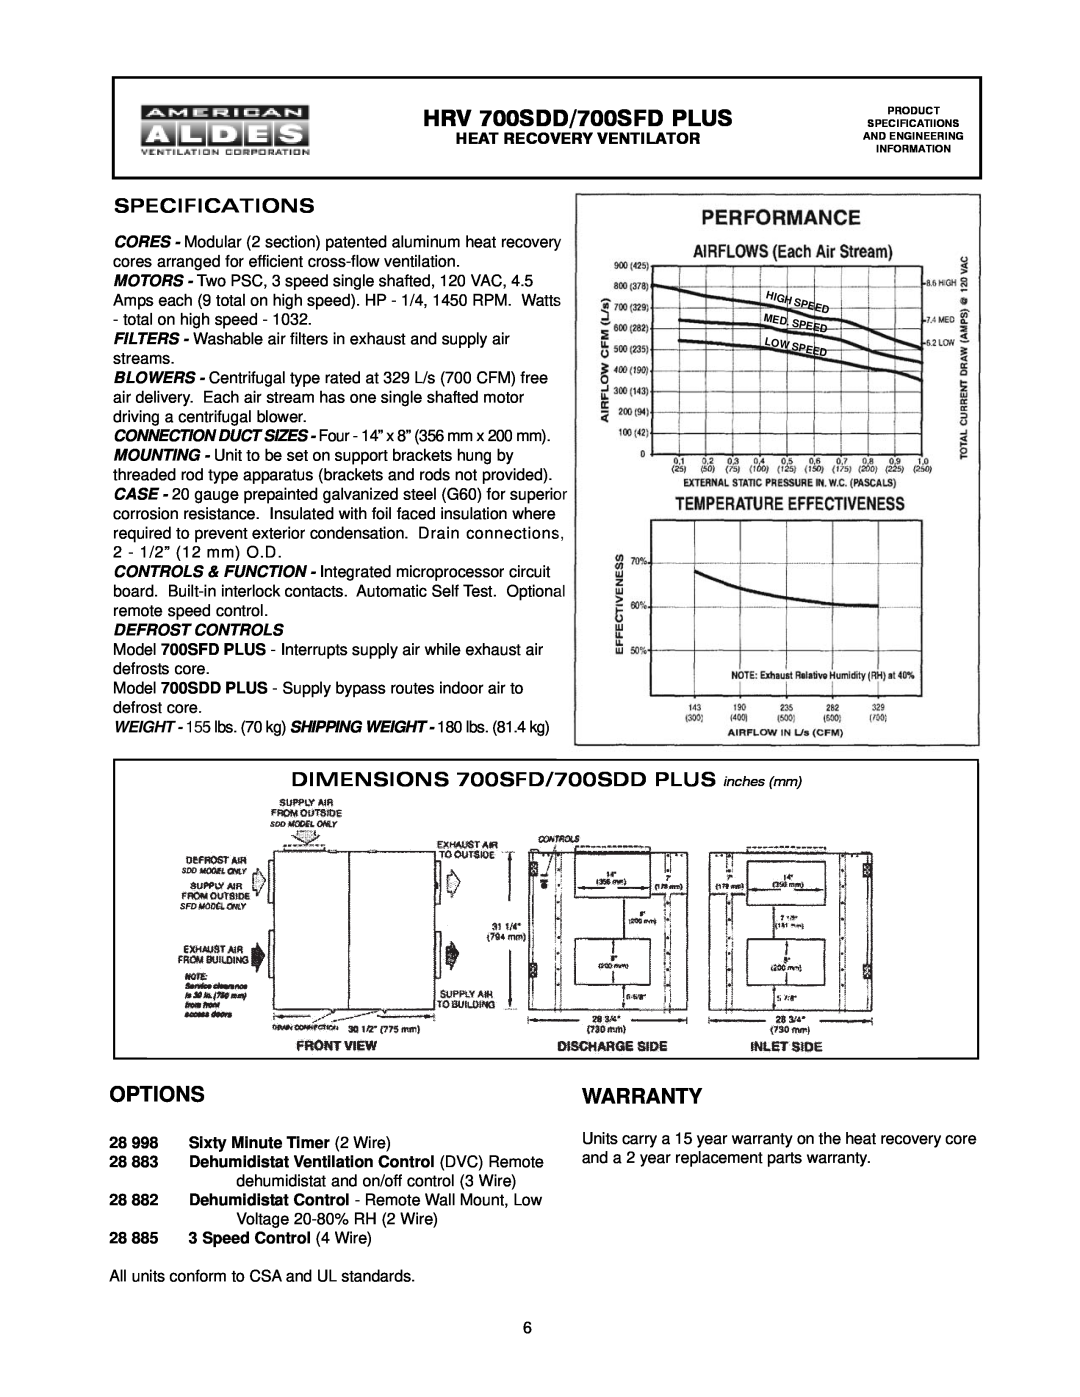 American Aldes HRV 700SFD manual HRV 700SDD/700SFD PLUS, Options, Warranty, Specifications, Heat Recovery Ventilator 